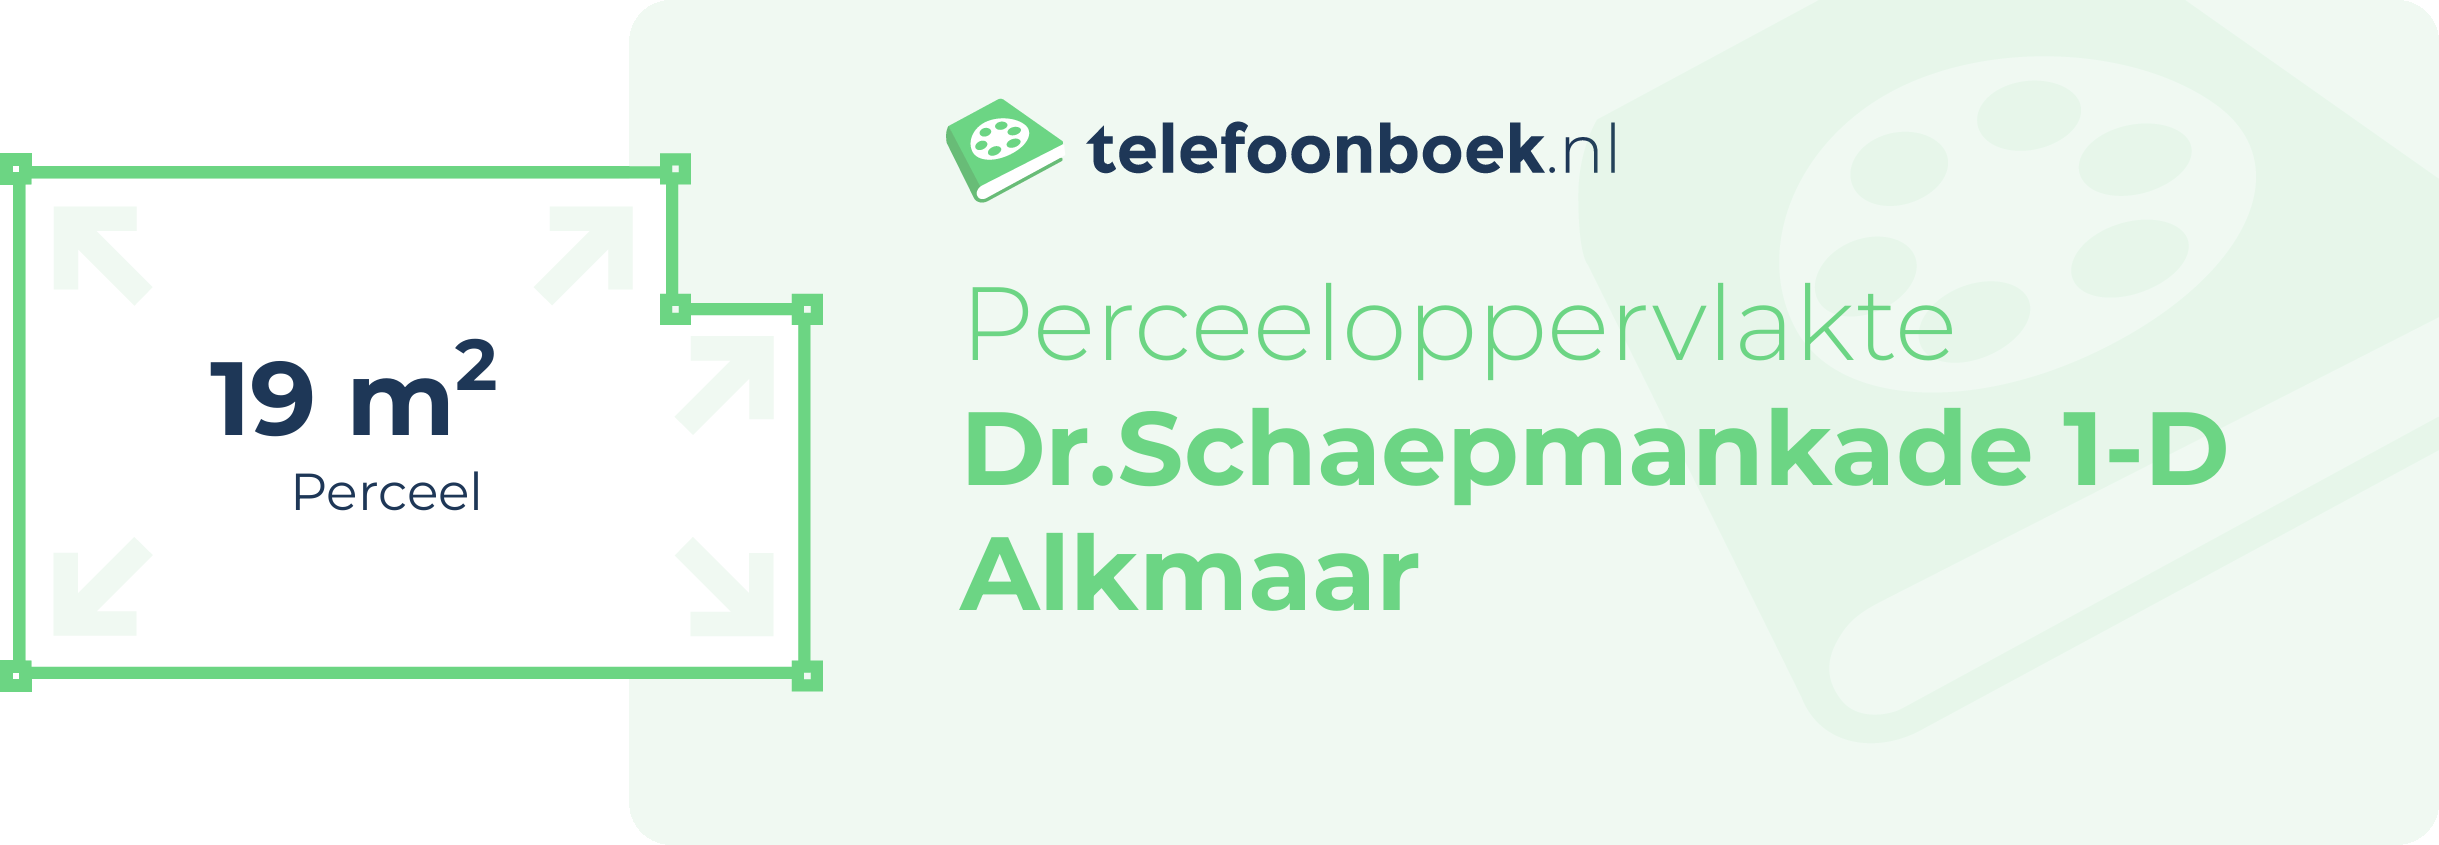 Perceeloppervlakte Dr.Schaepmankade 1-D Alkmaar